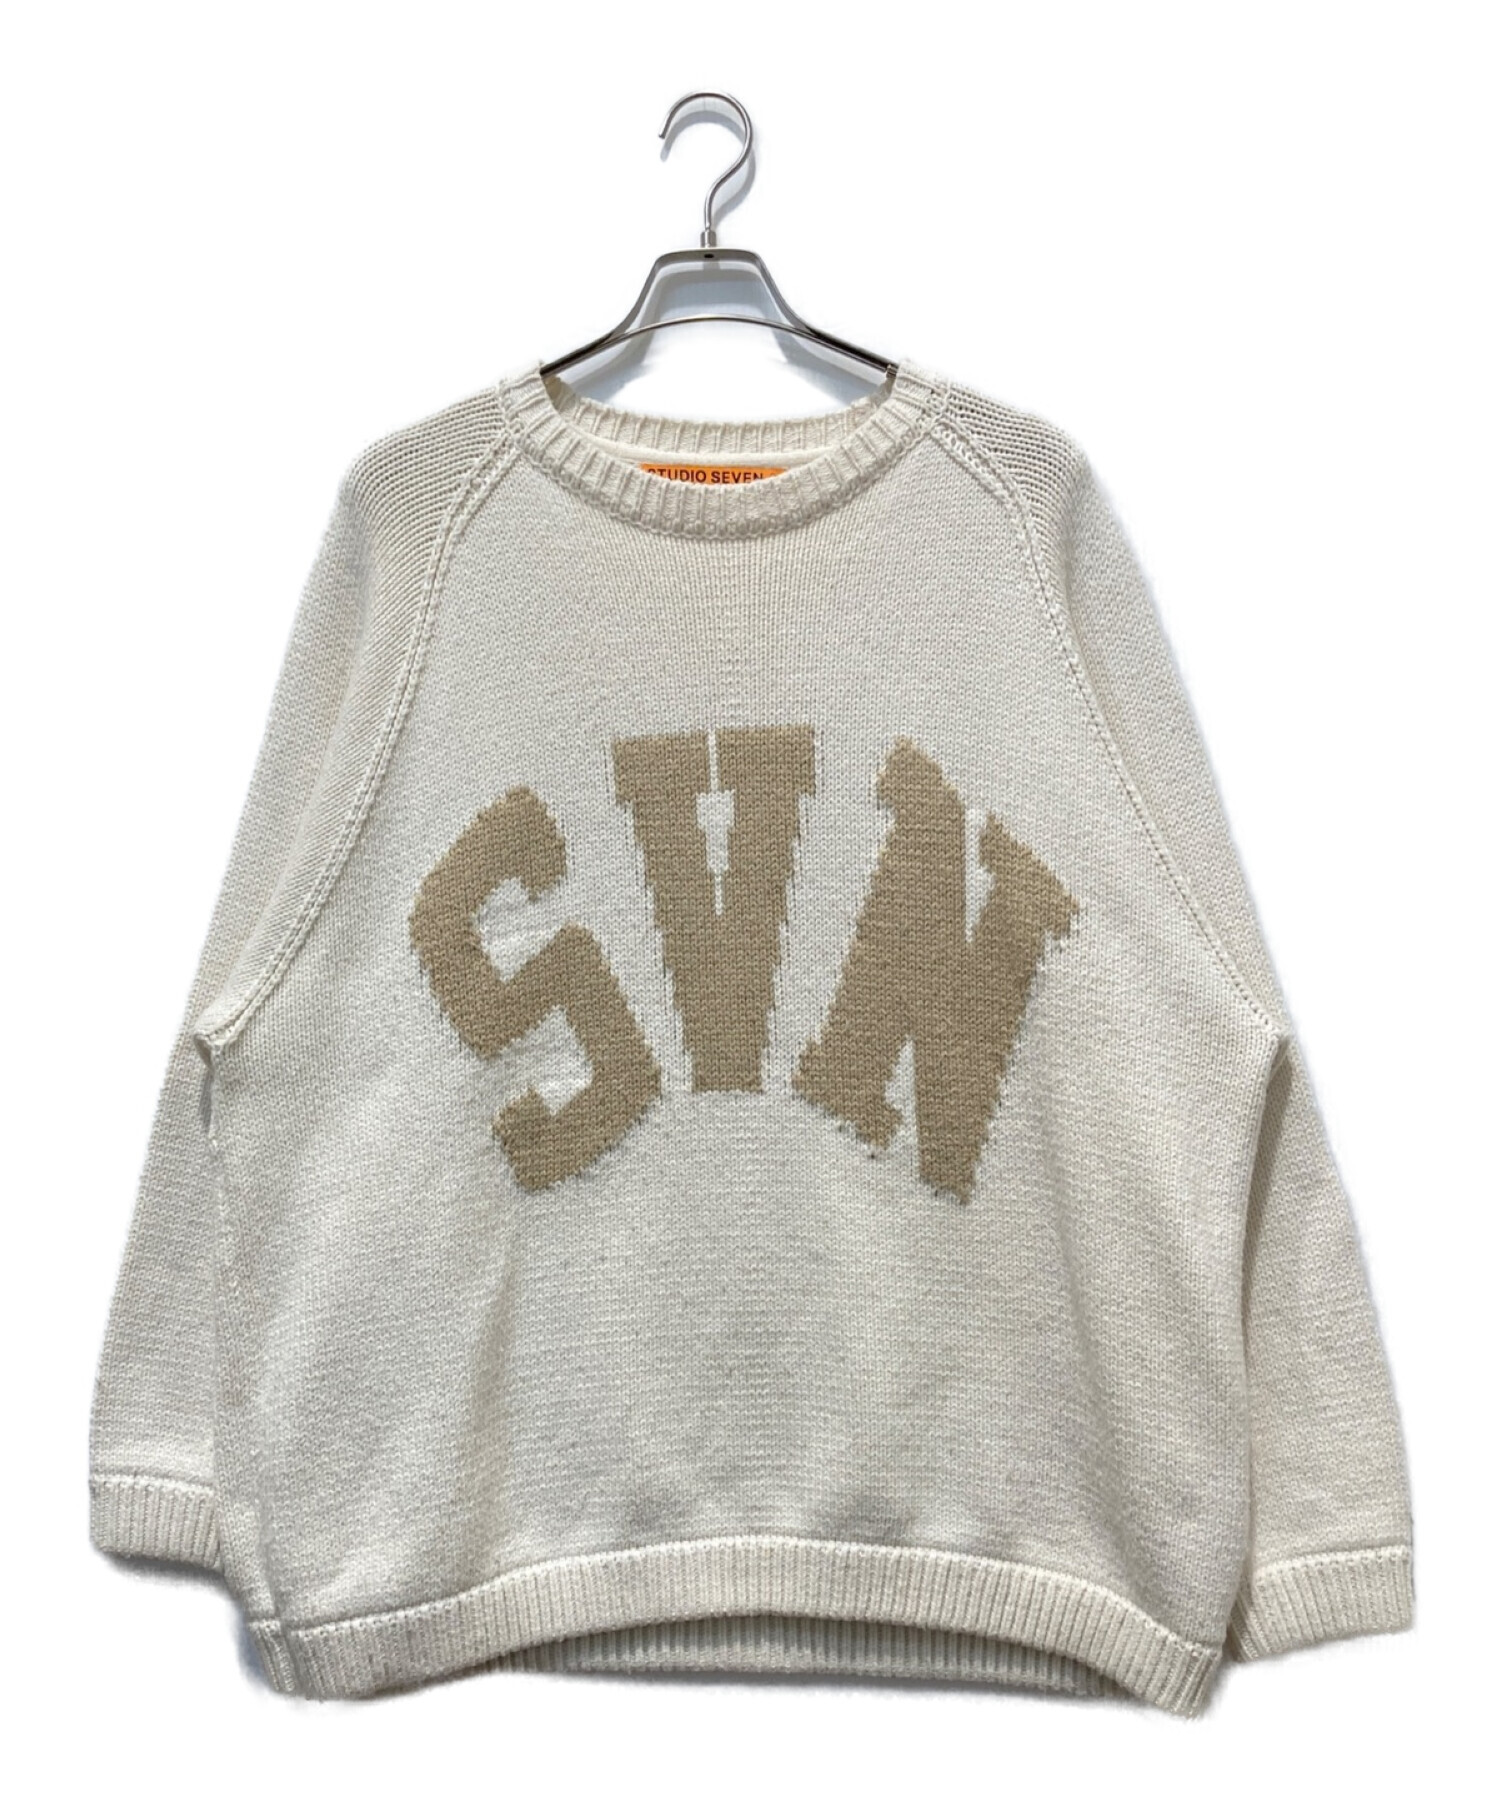 studio seven スタジオ セブン SVN Crew Knit - ニット/セーター